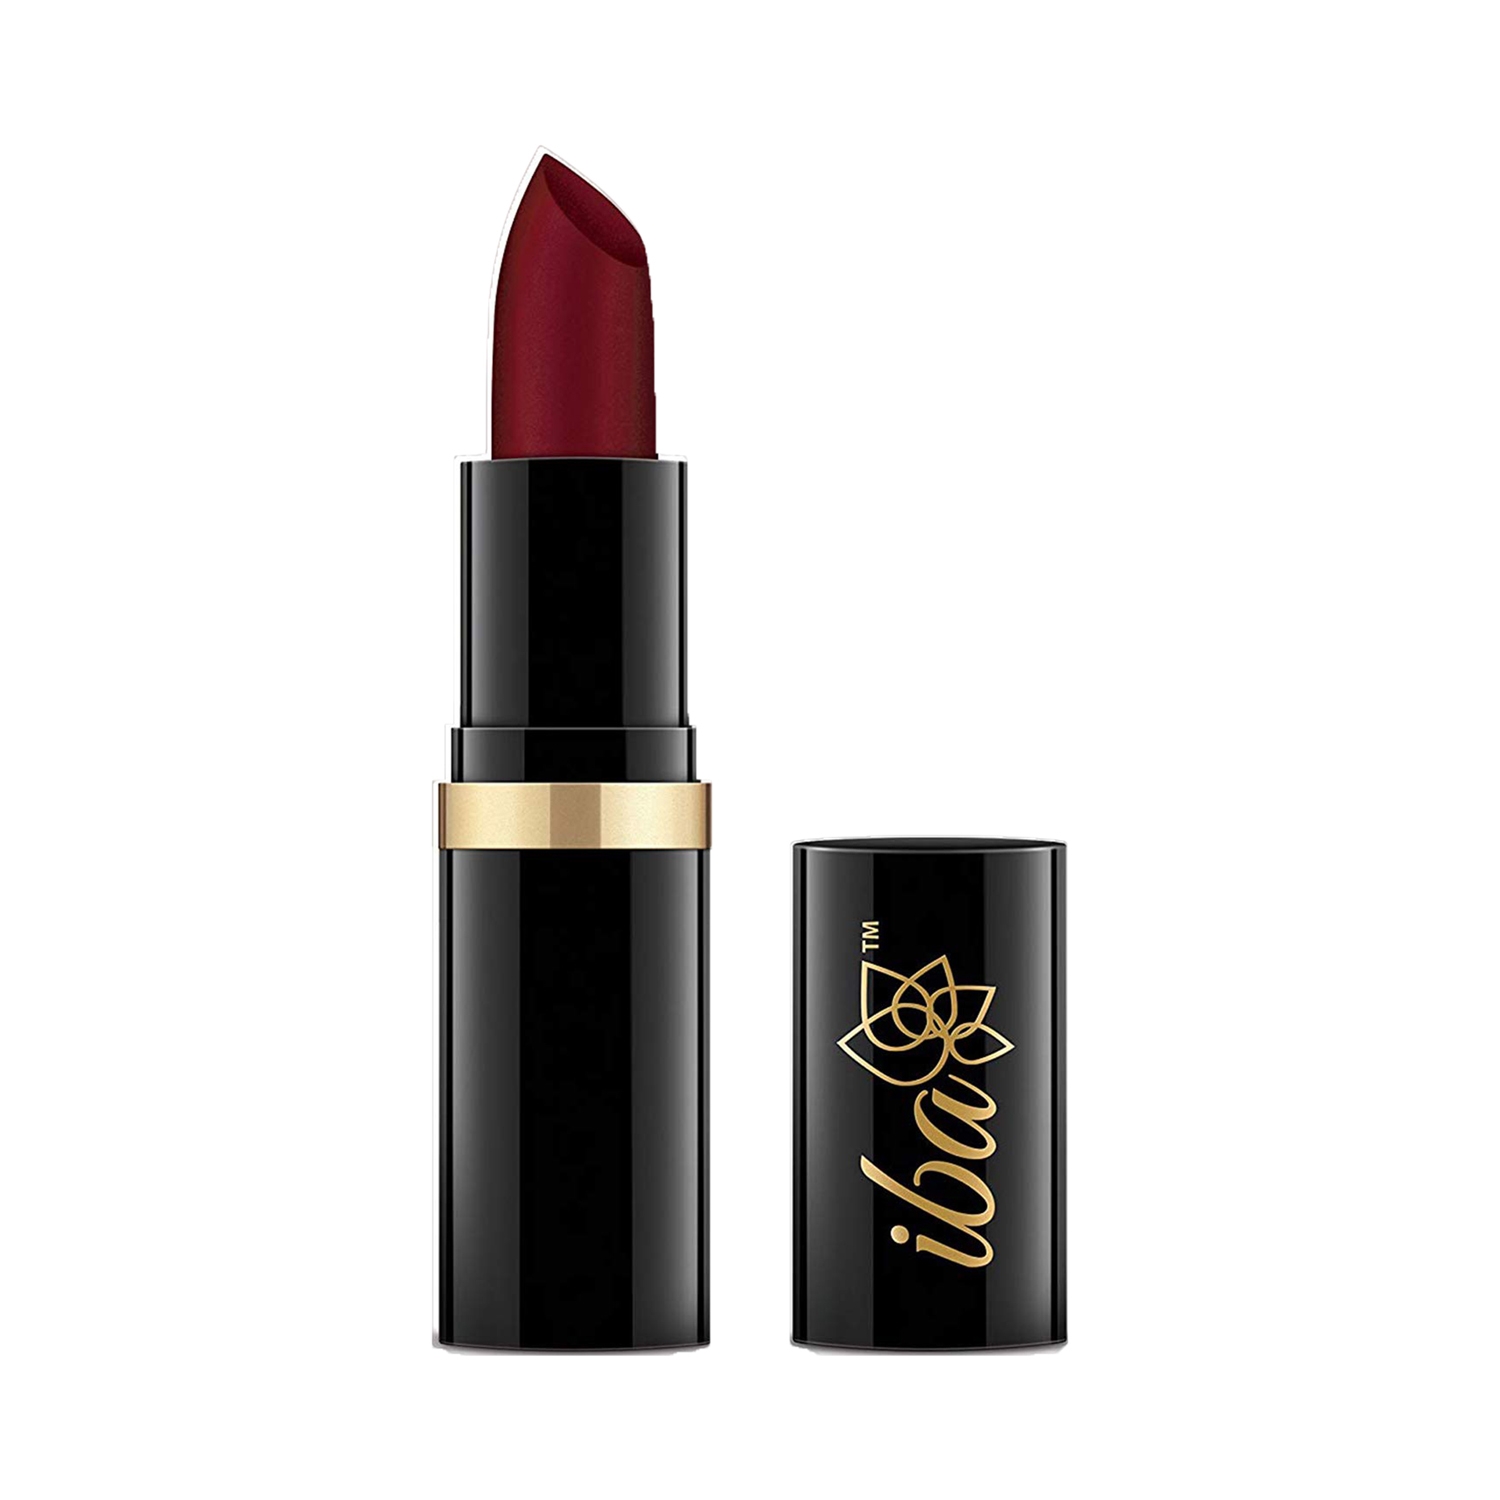 Iba | Iba Pure Lips Moisture Rich Lipstick - A72 Maroon Burst (4g)